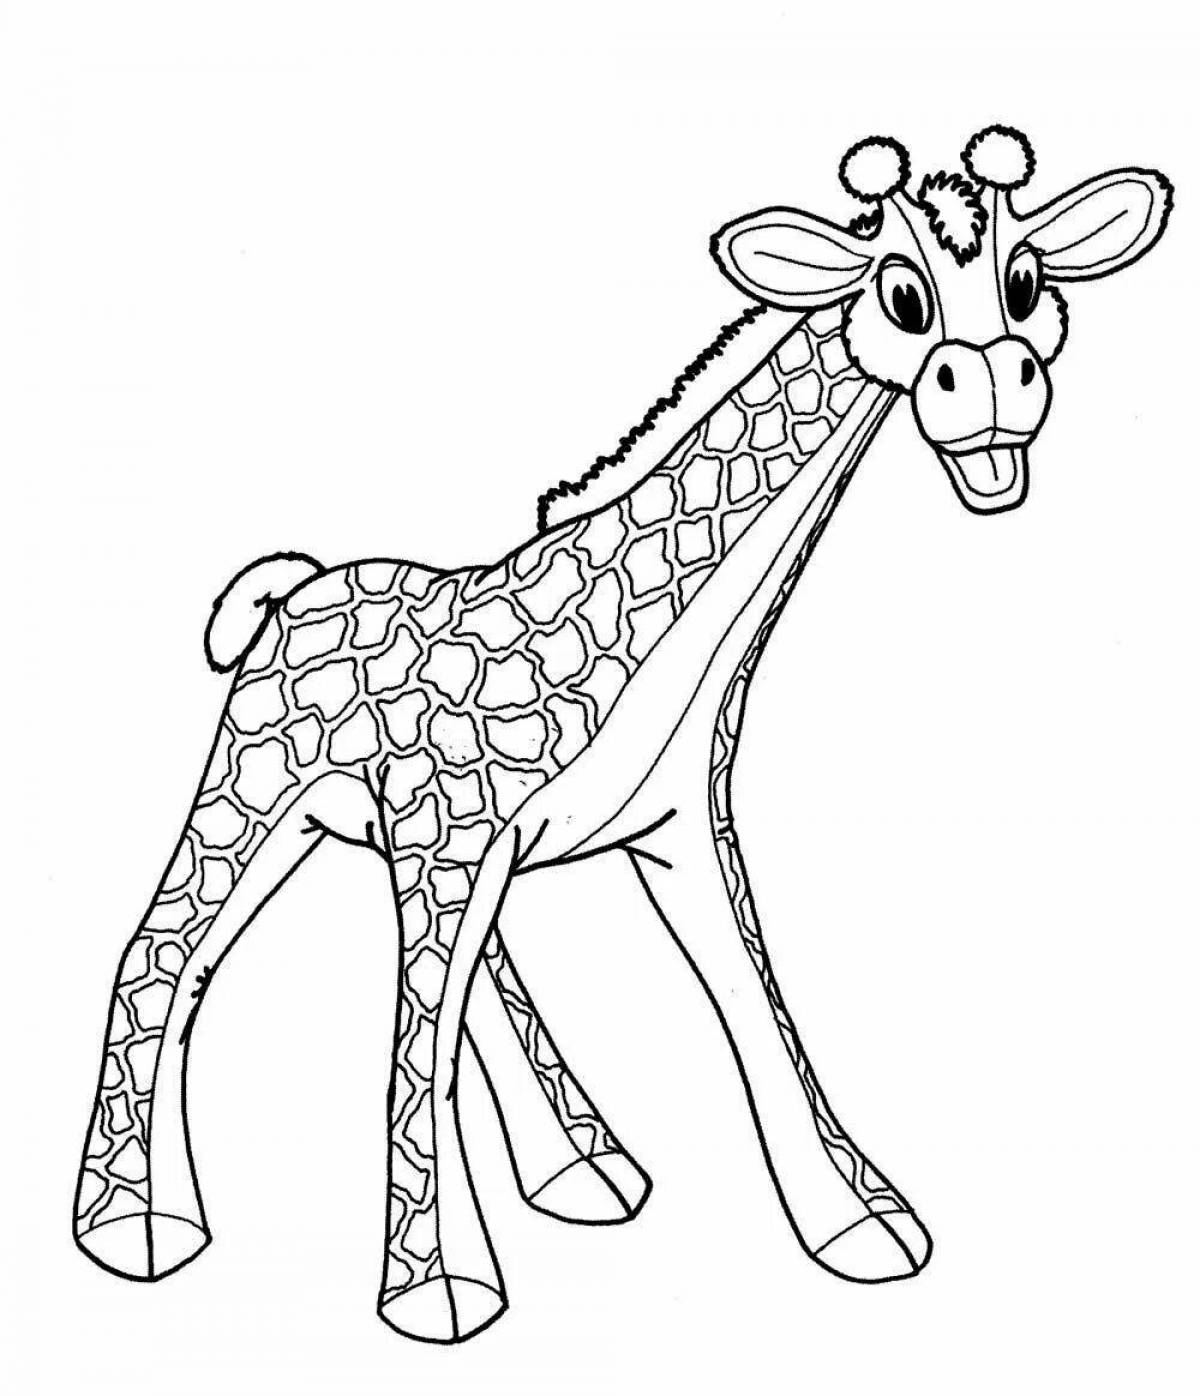 Adorable giraffe coloring page